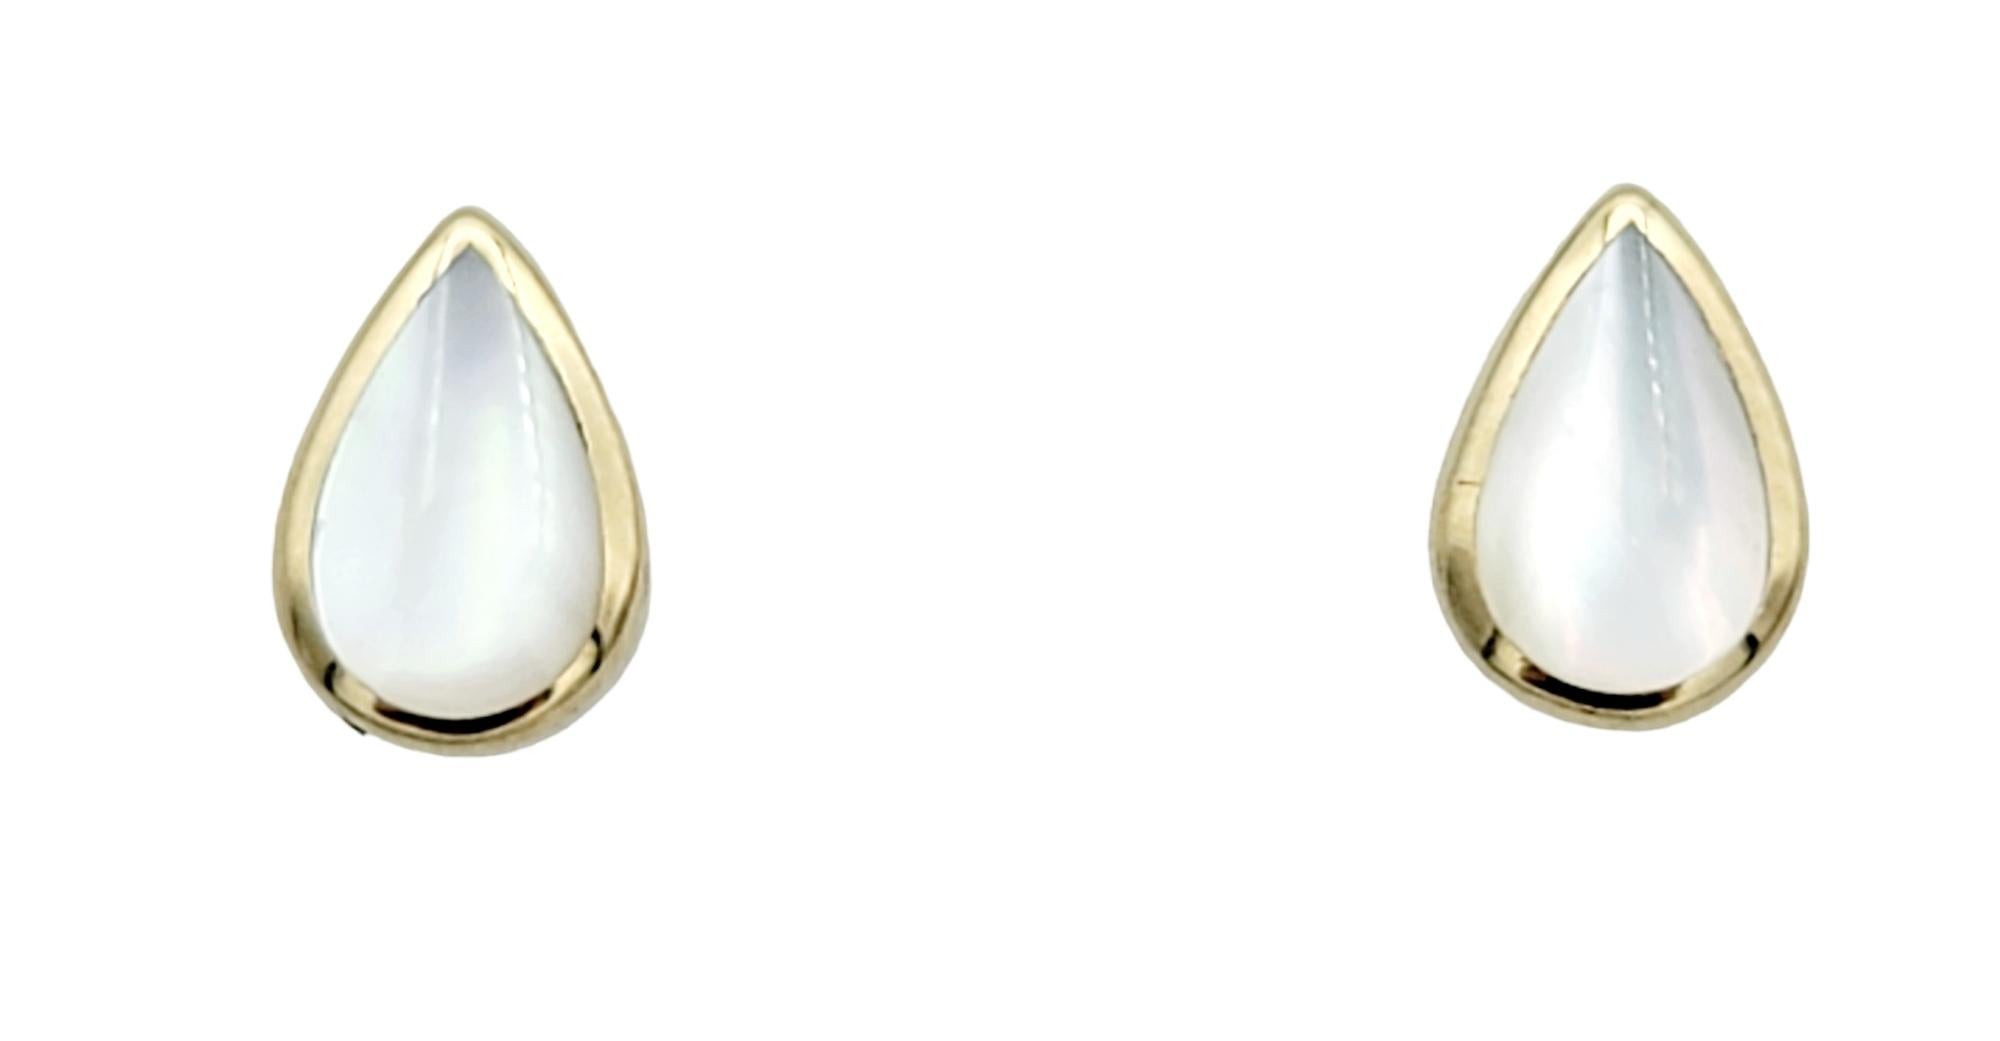 Tumbled Kabana Teardrop Shaped Mother of Pearl Stud Earrings in 14 Karat Yellow Gold